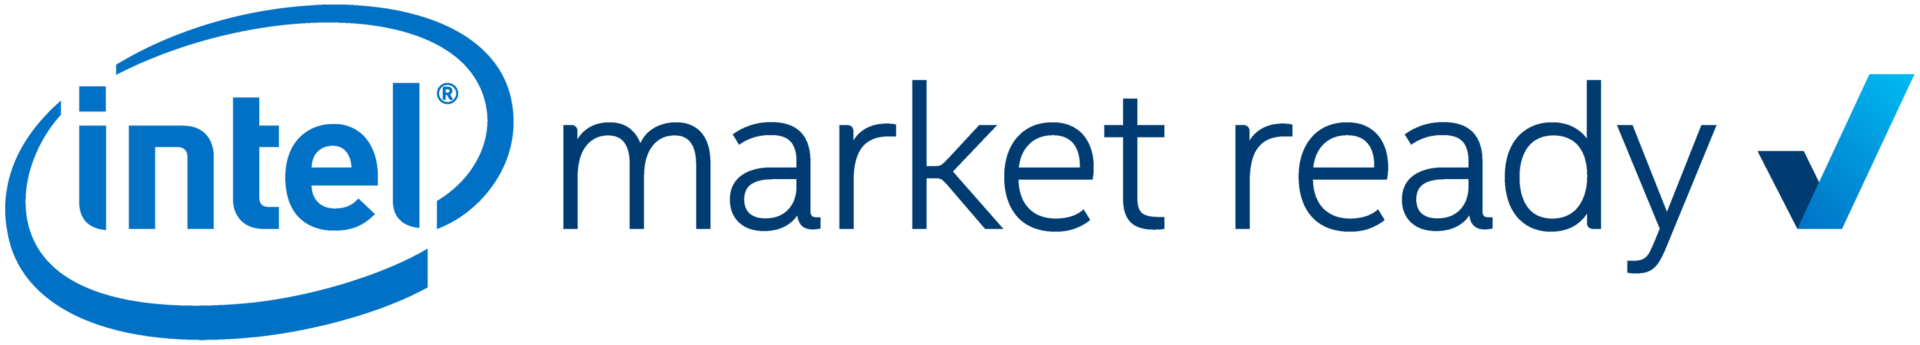 intel market ready logo